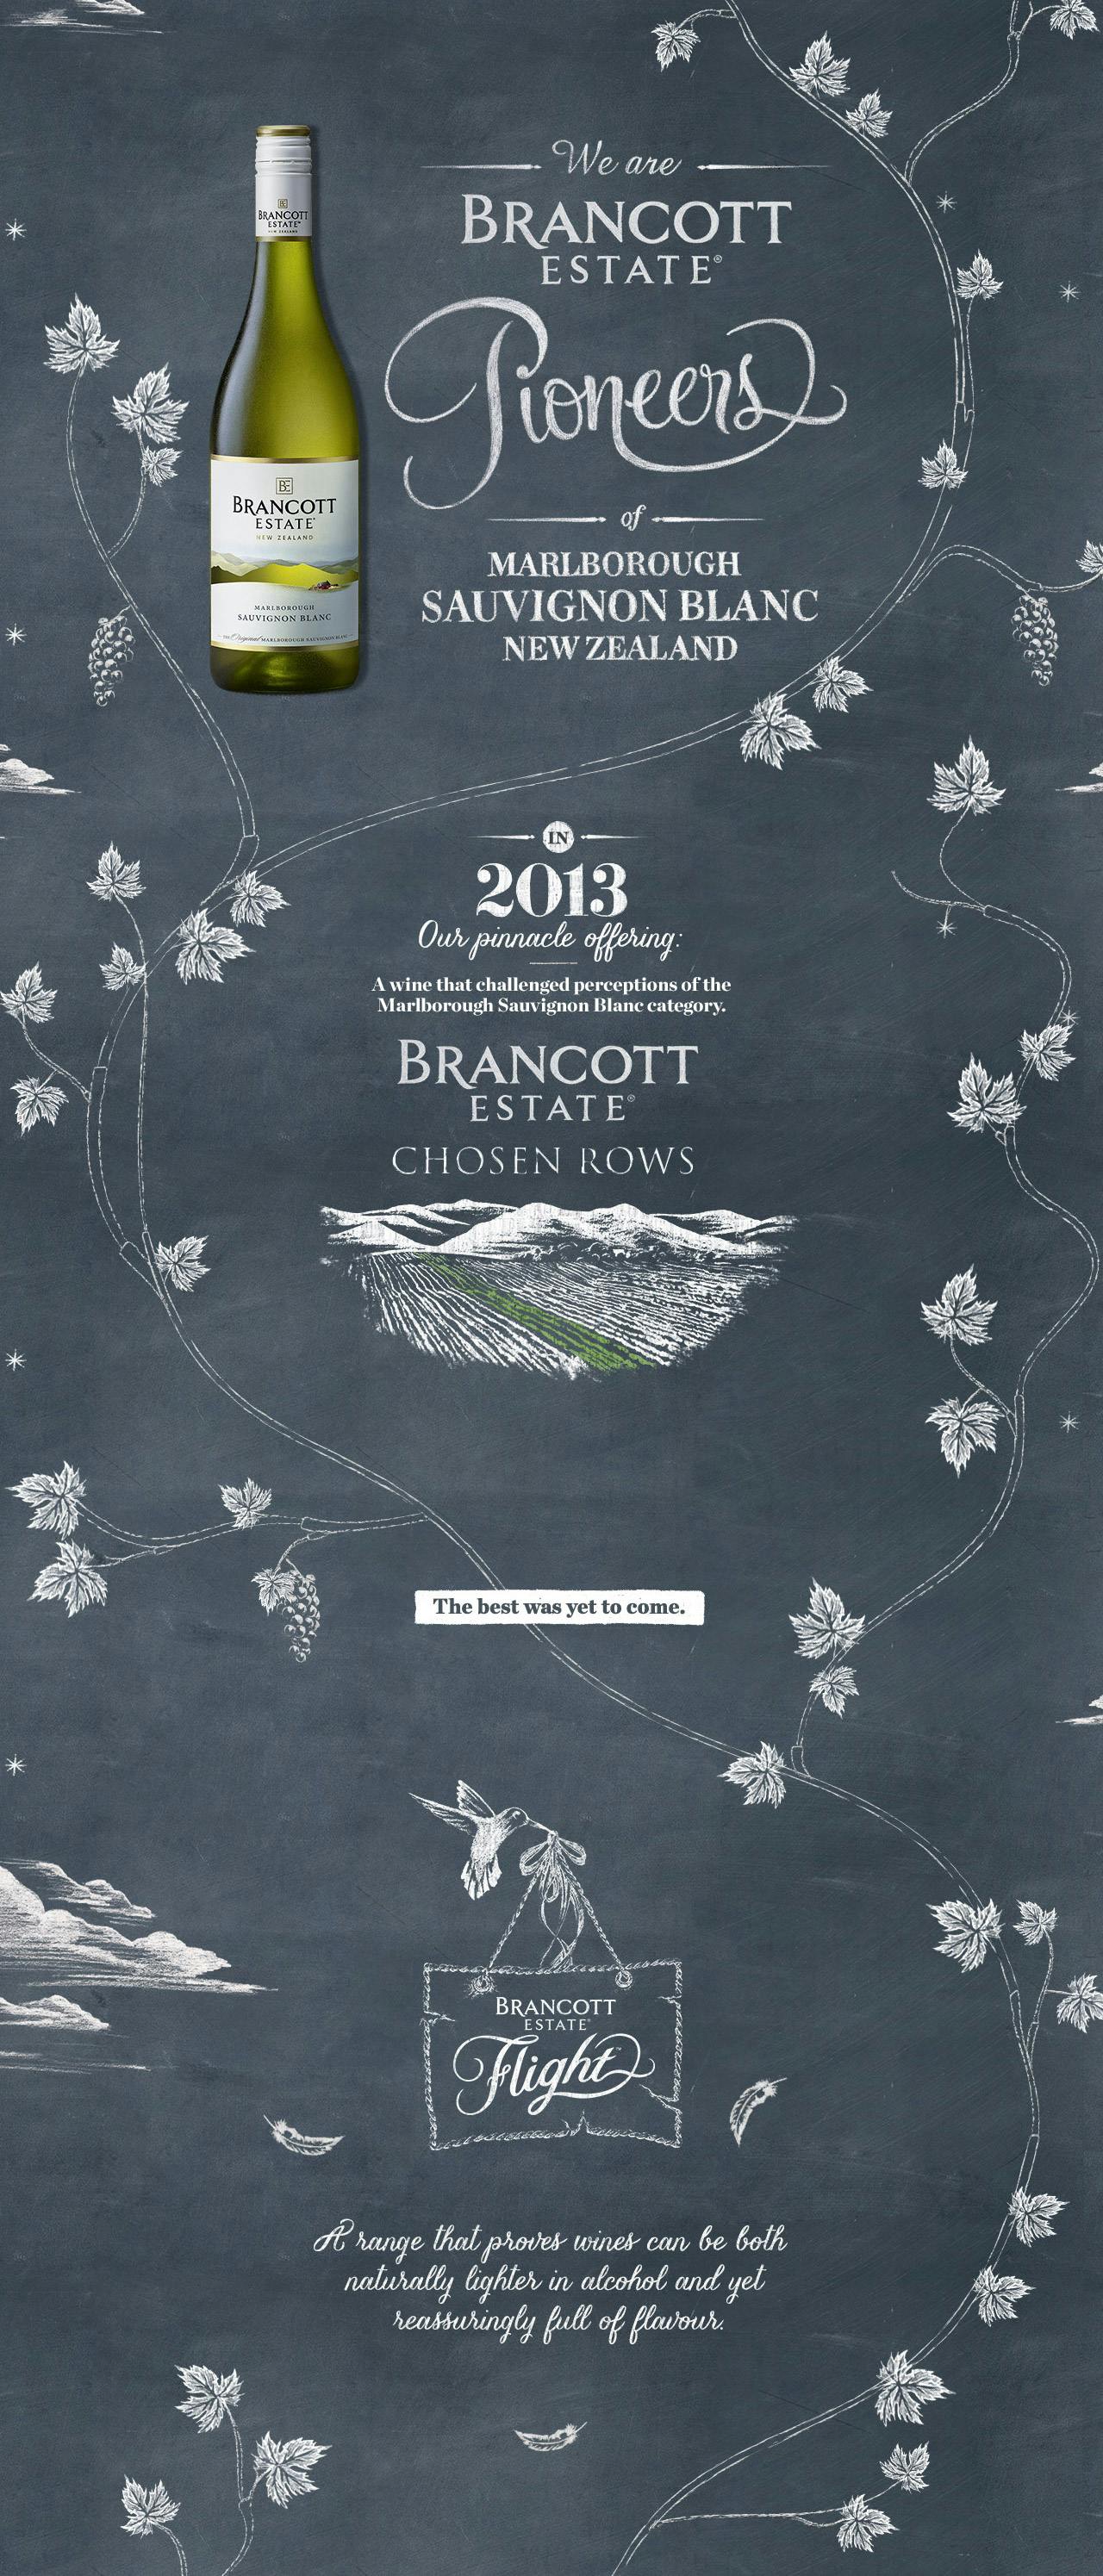 Brancott Estate Pioneers Website Screenshot